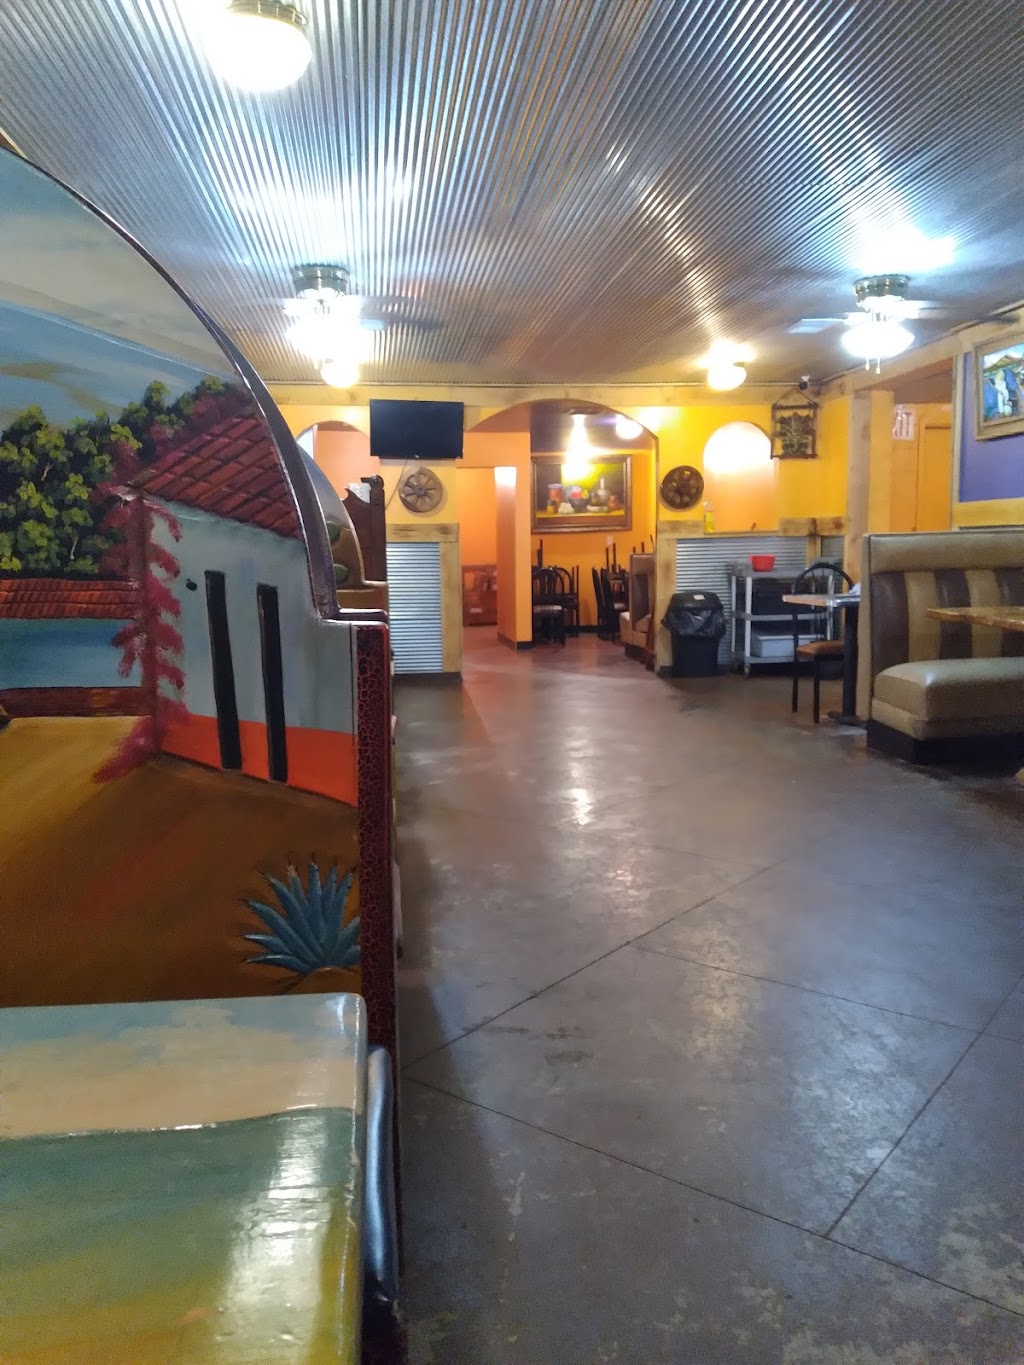 Molecajete Mexican Restaurant | 301 Greenwood Ave, Lepanto, AR 72354, USA | Phone: (870) 475-3010